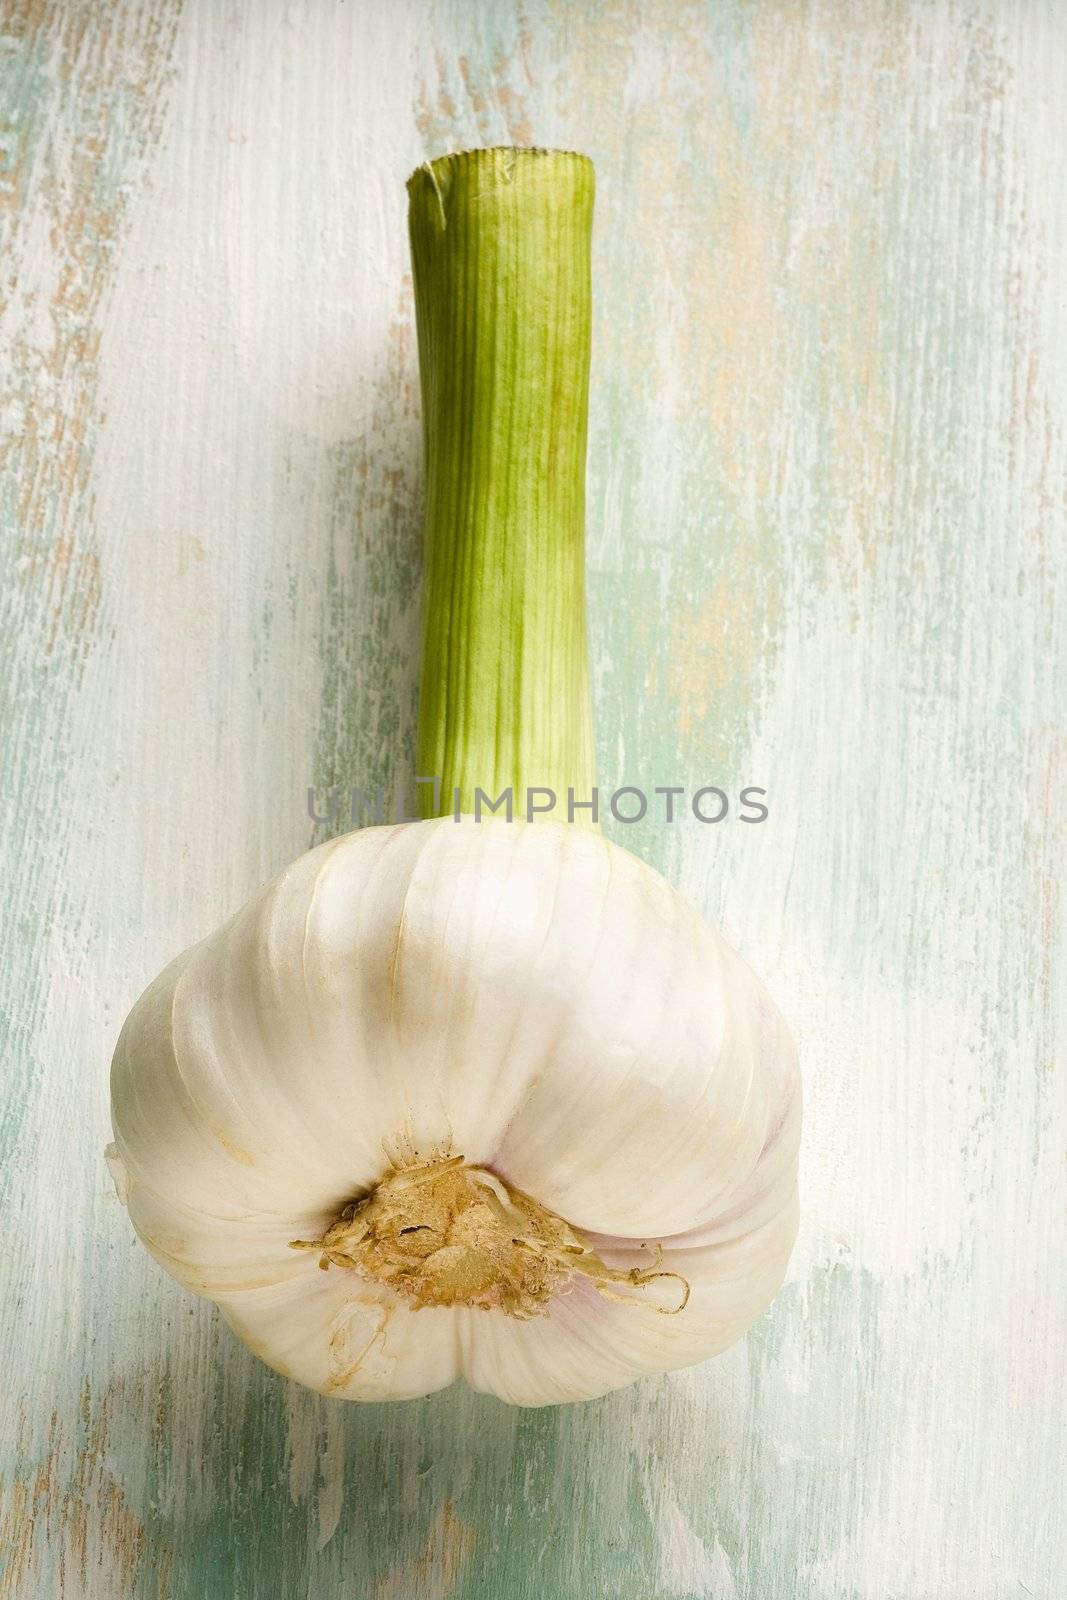 Garlic on a blue table
